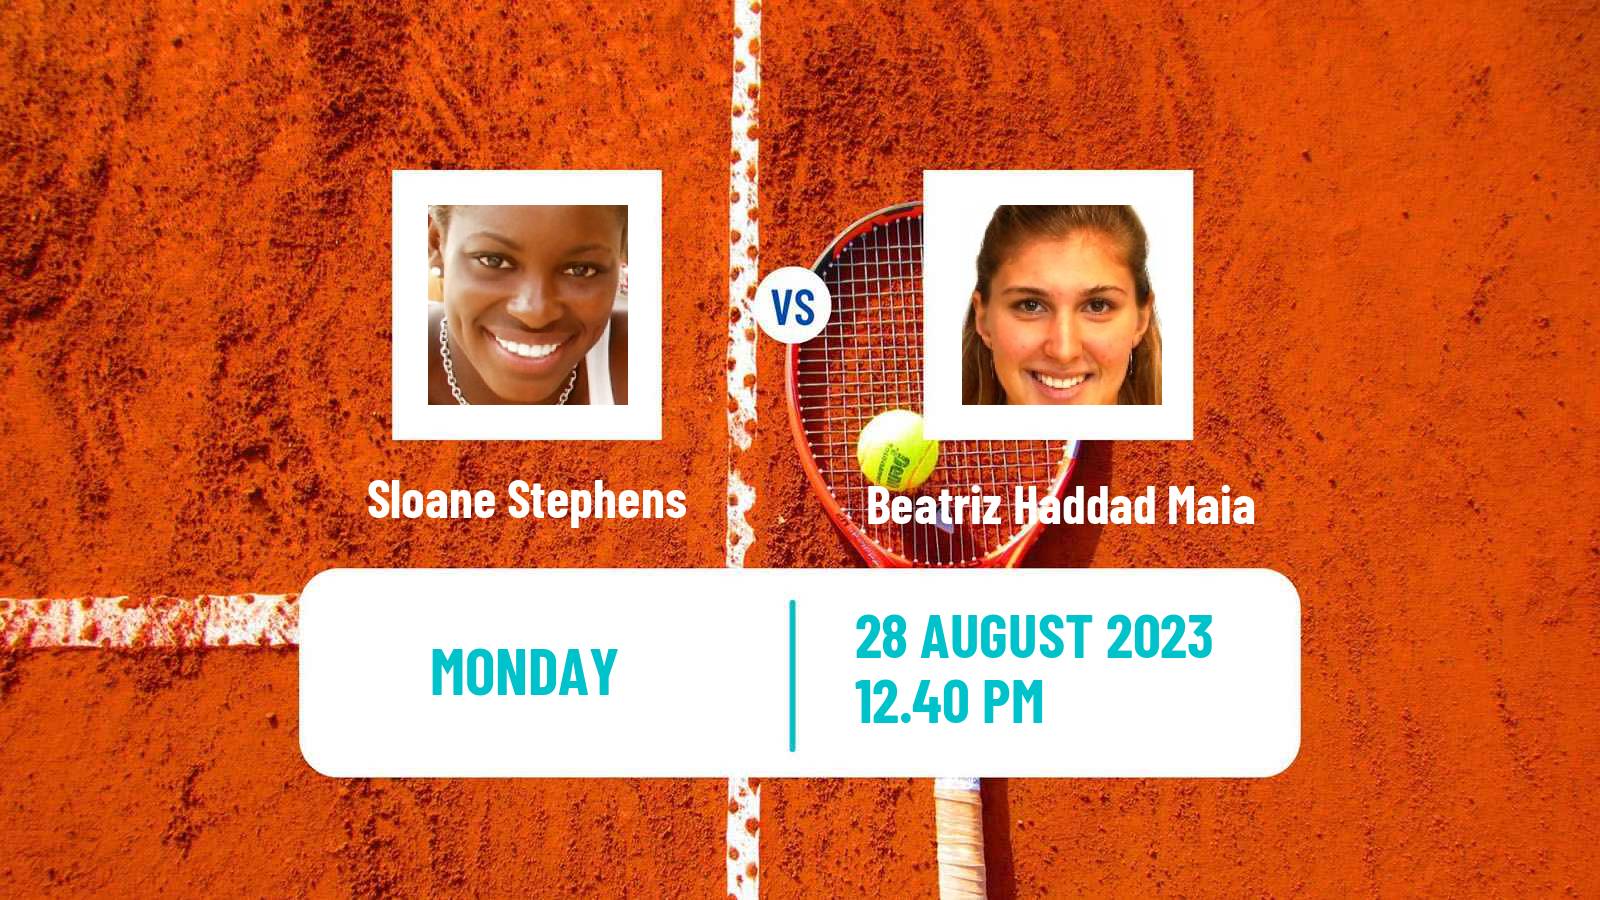 Tennis WTA US Open Sloane Stephens - Beatriz Haddad Maia